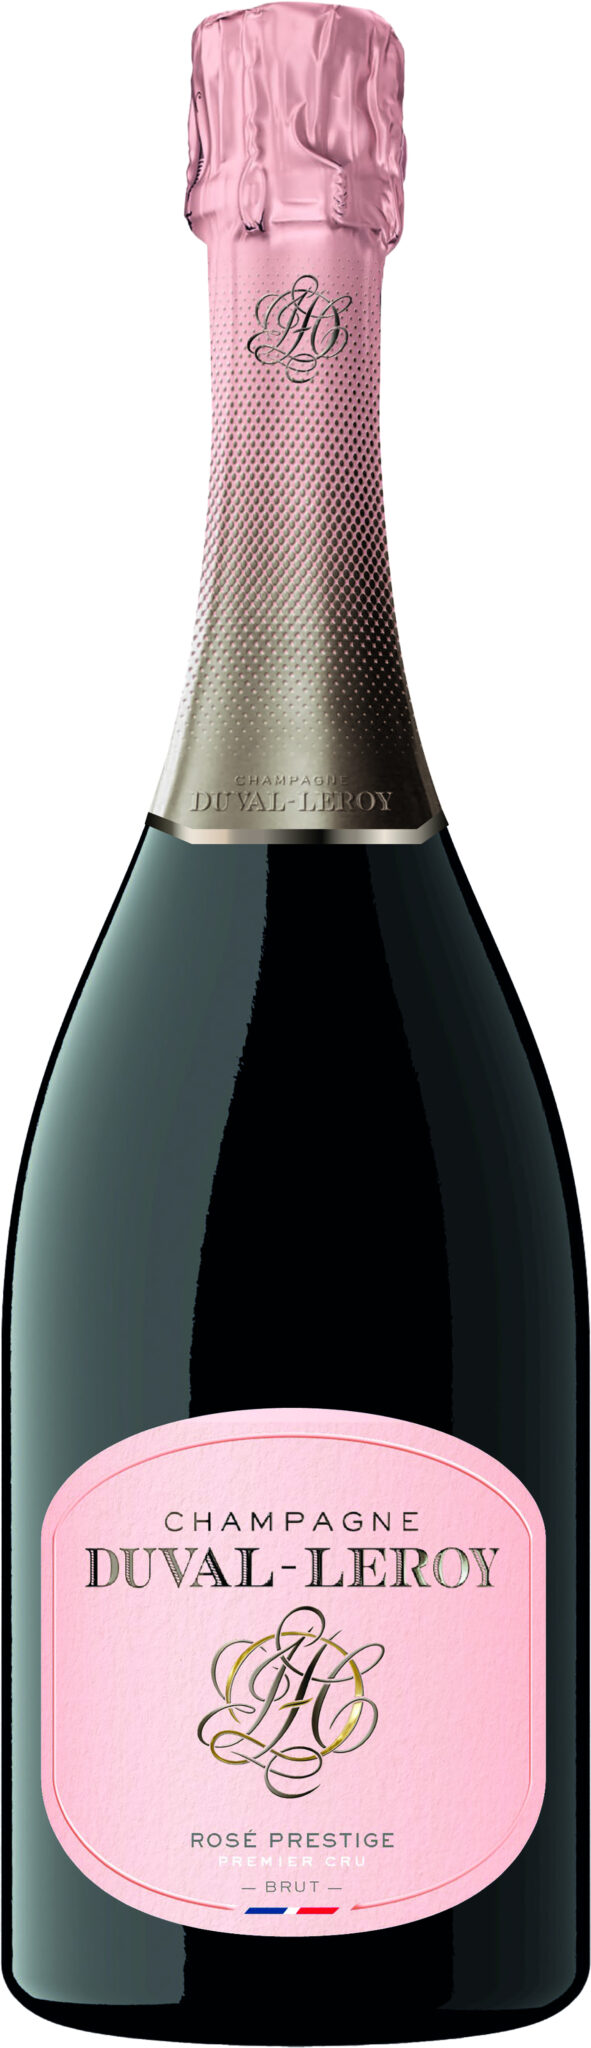 Duval-Leroy Prestige, Champagne Rosé Premier Cru